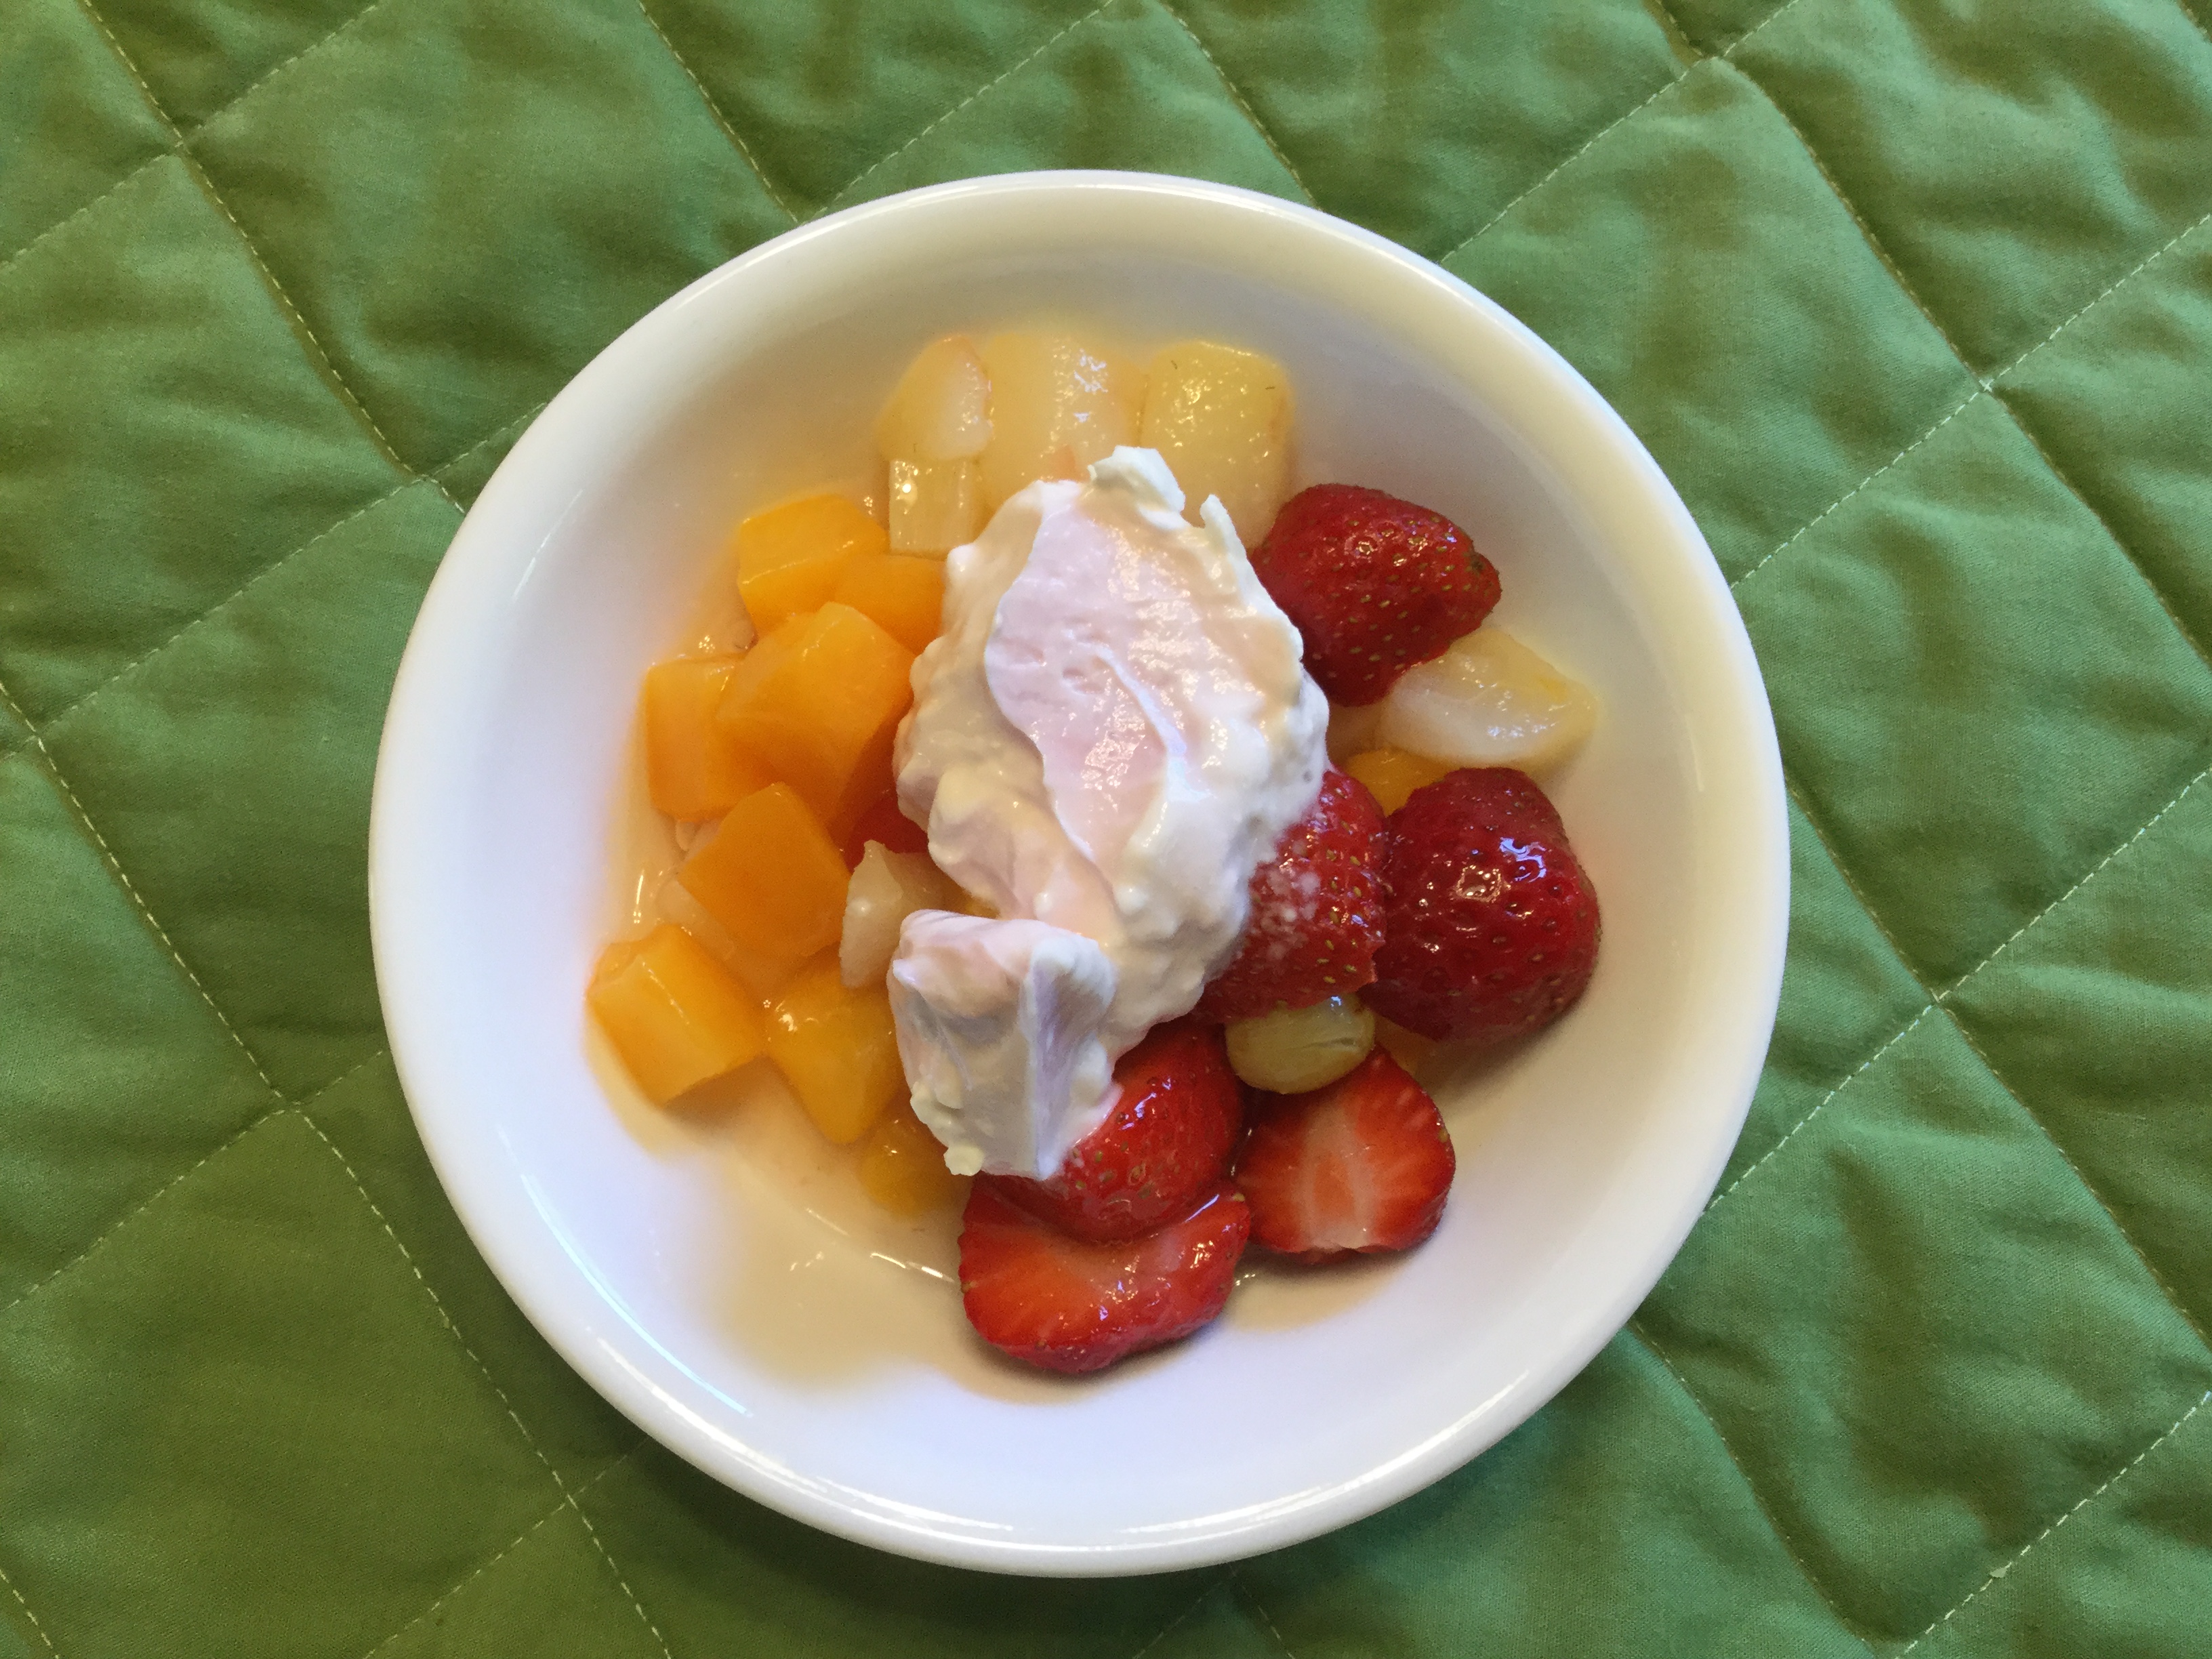 Blueberry-Pineapple Salad with Creamy Yogurt Dressing manella